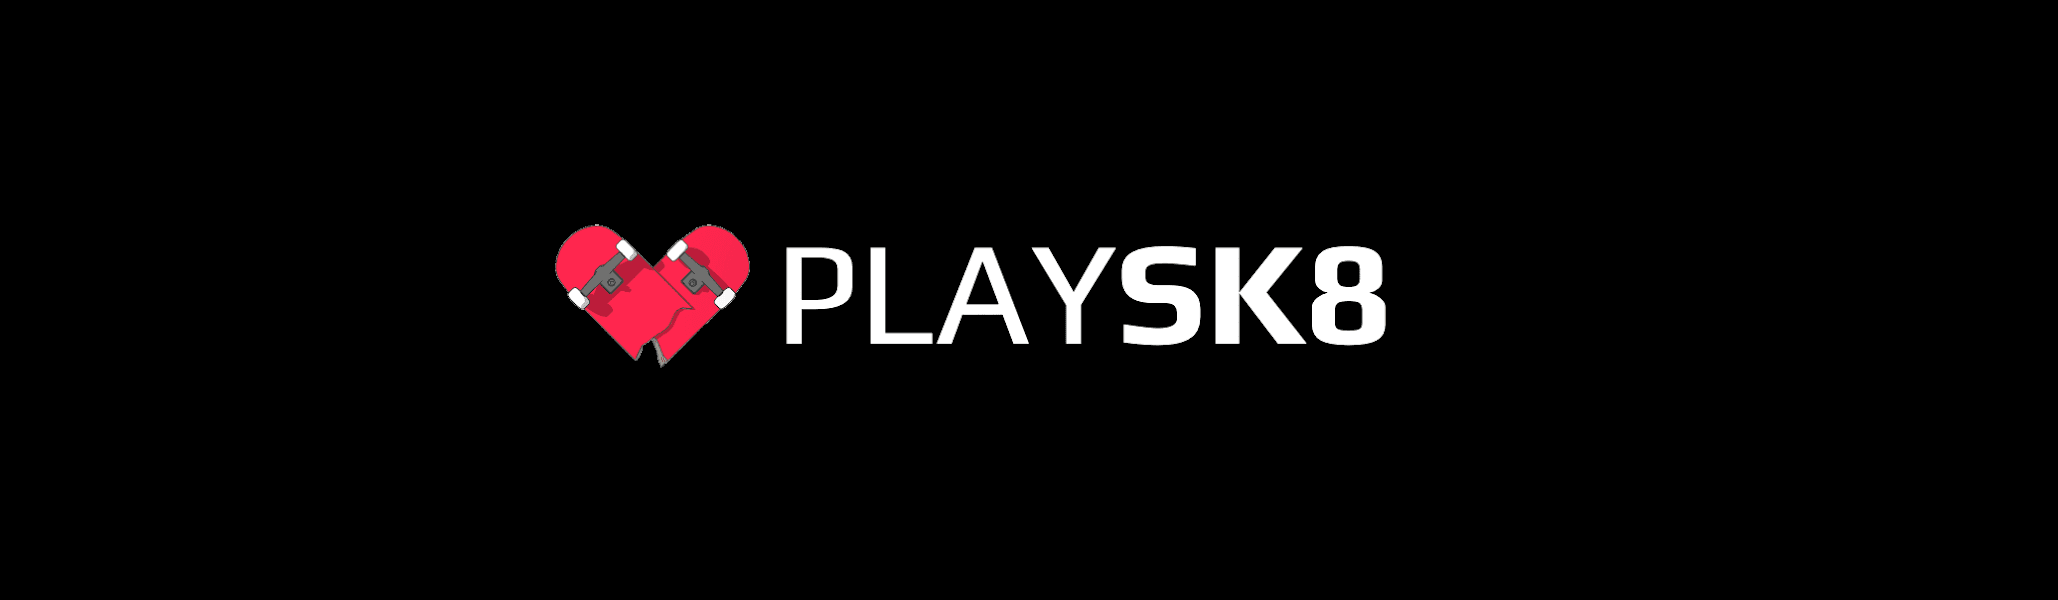 PLAYSK8 banner